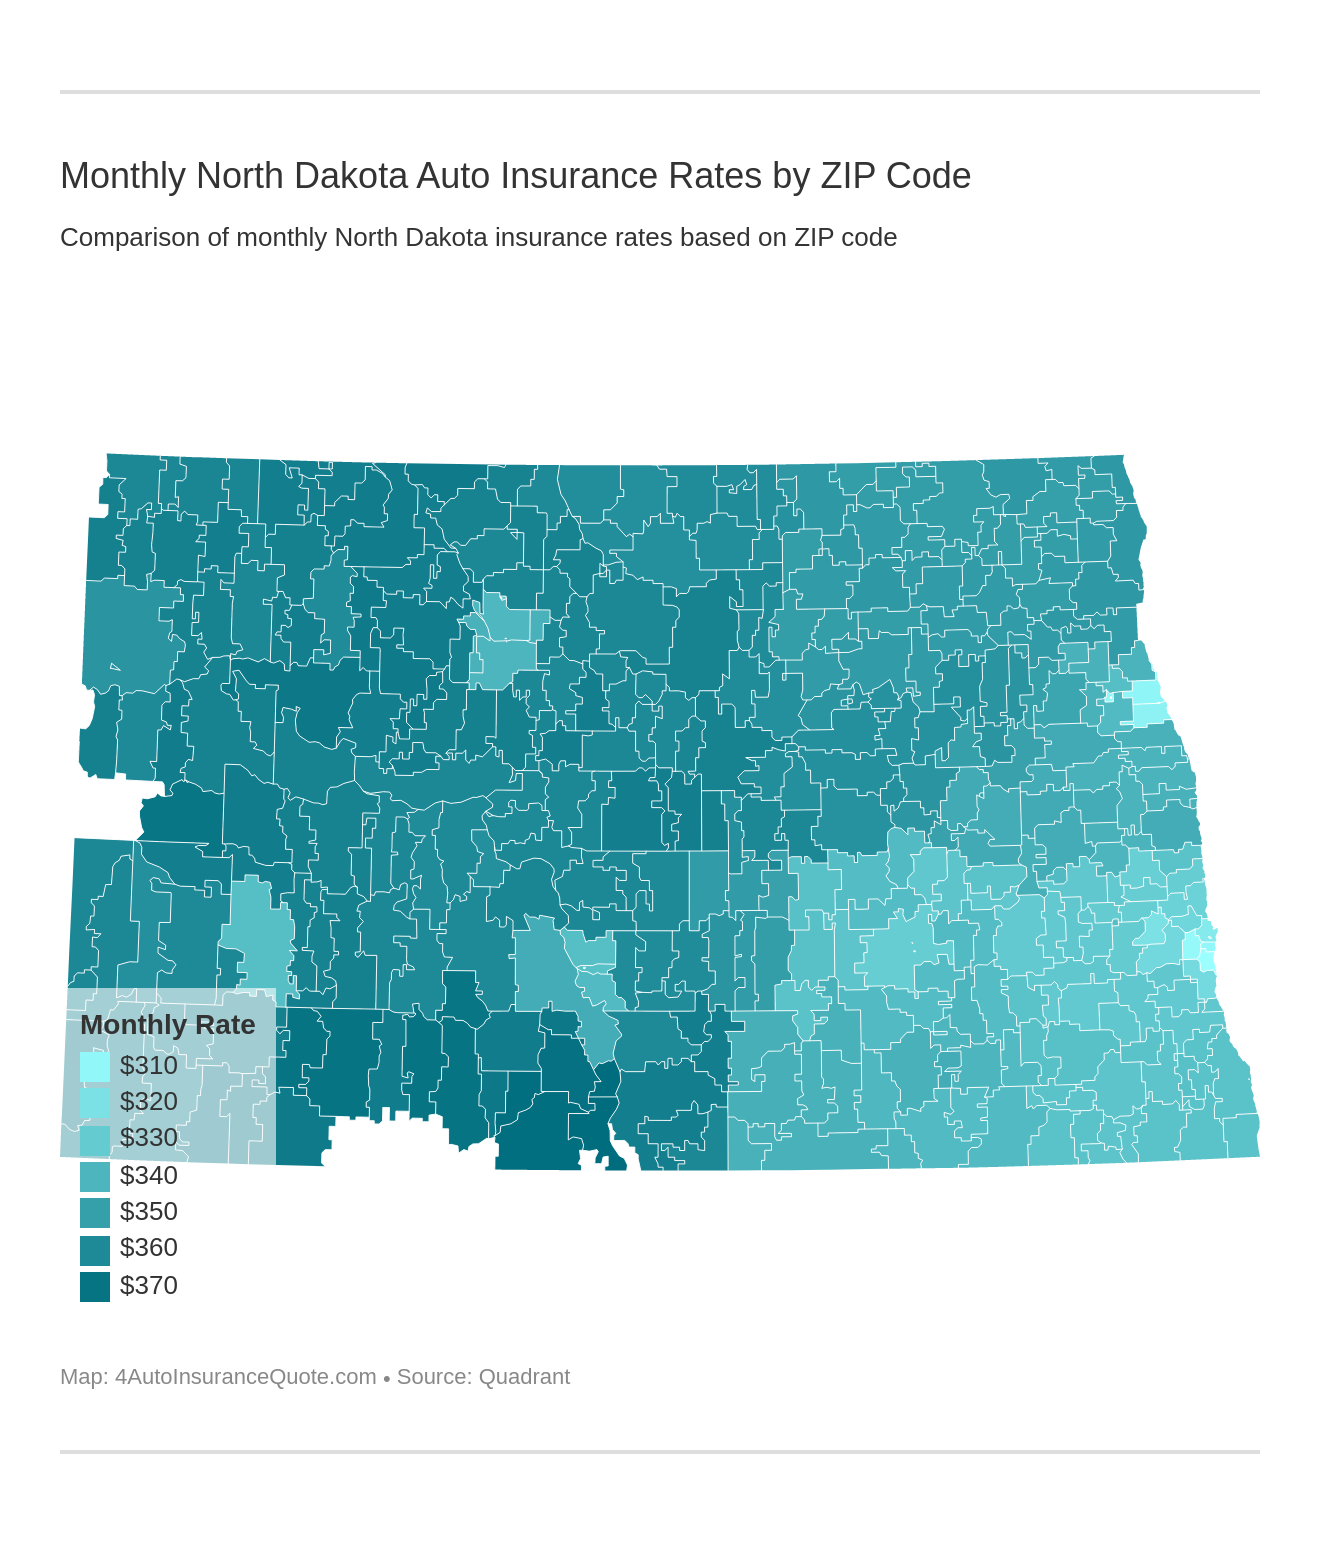 Monthly North Dakota Auto Insurance Rates by ZIP Code